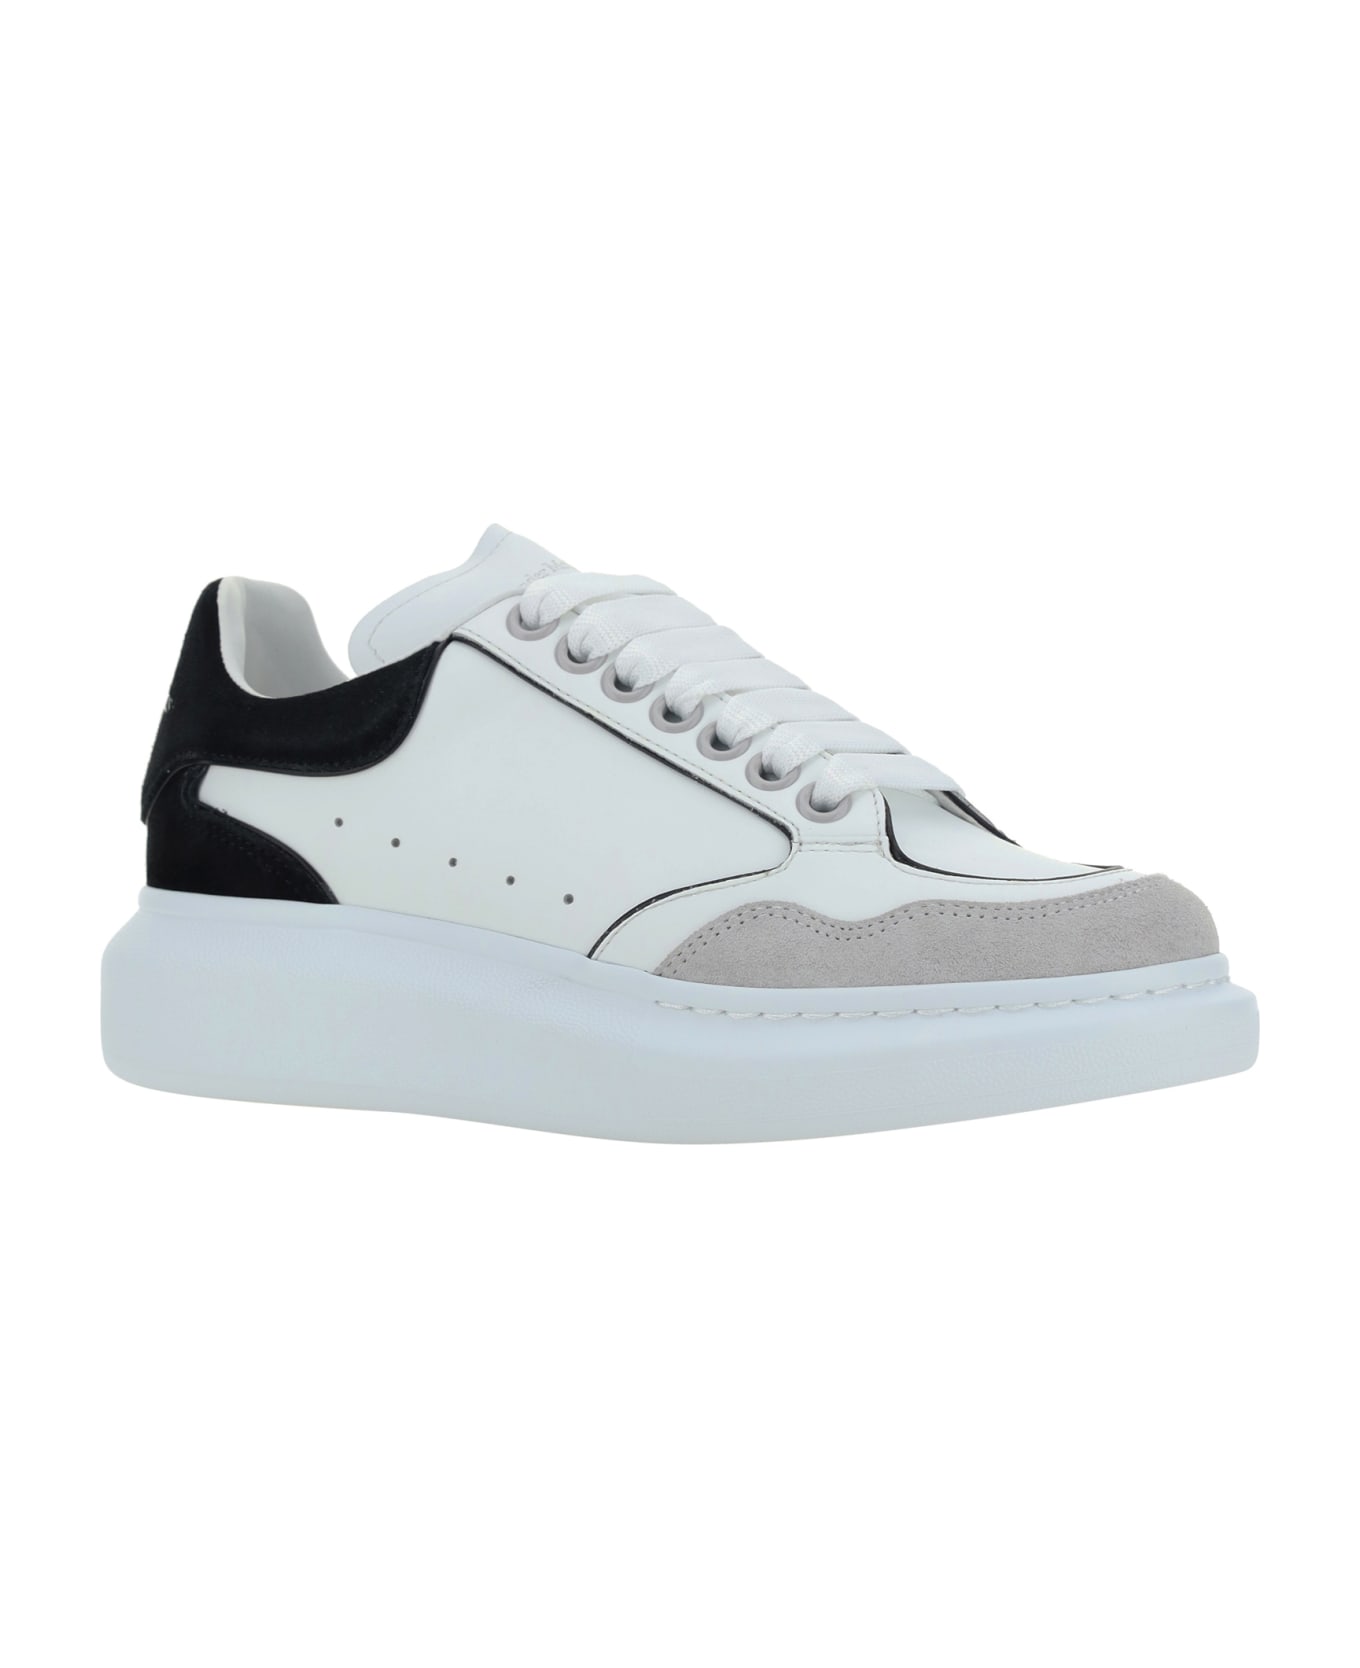 Alexander McQueen Sneakers - White/luna/black スニーカー